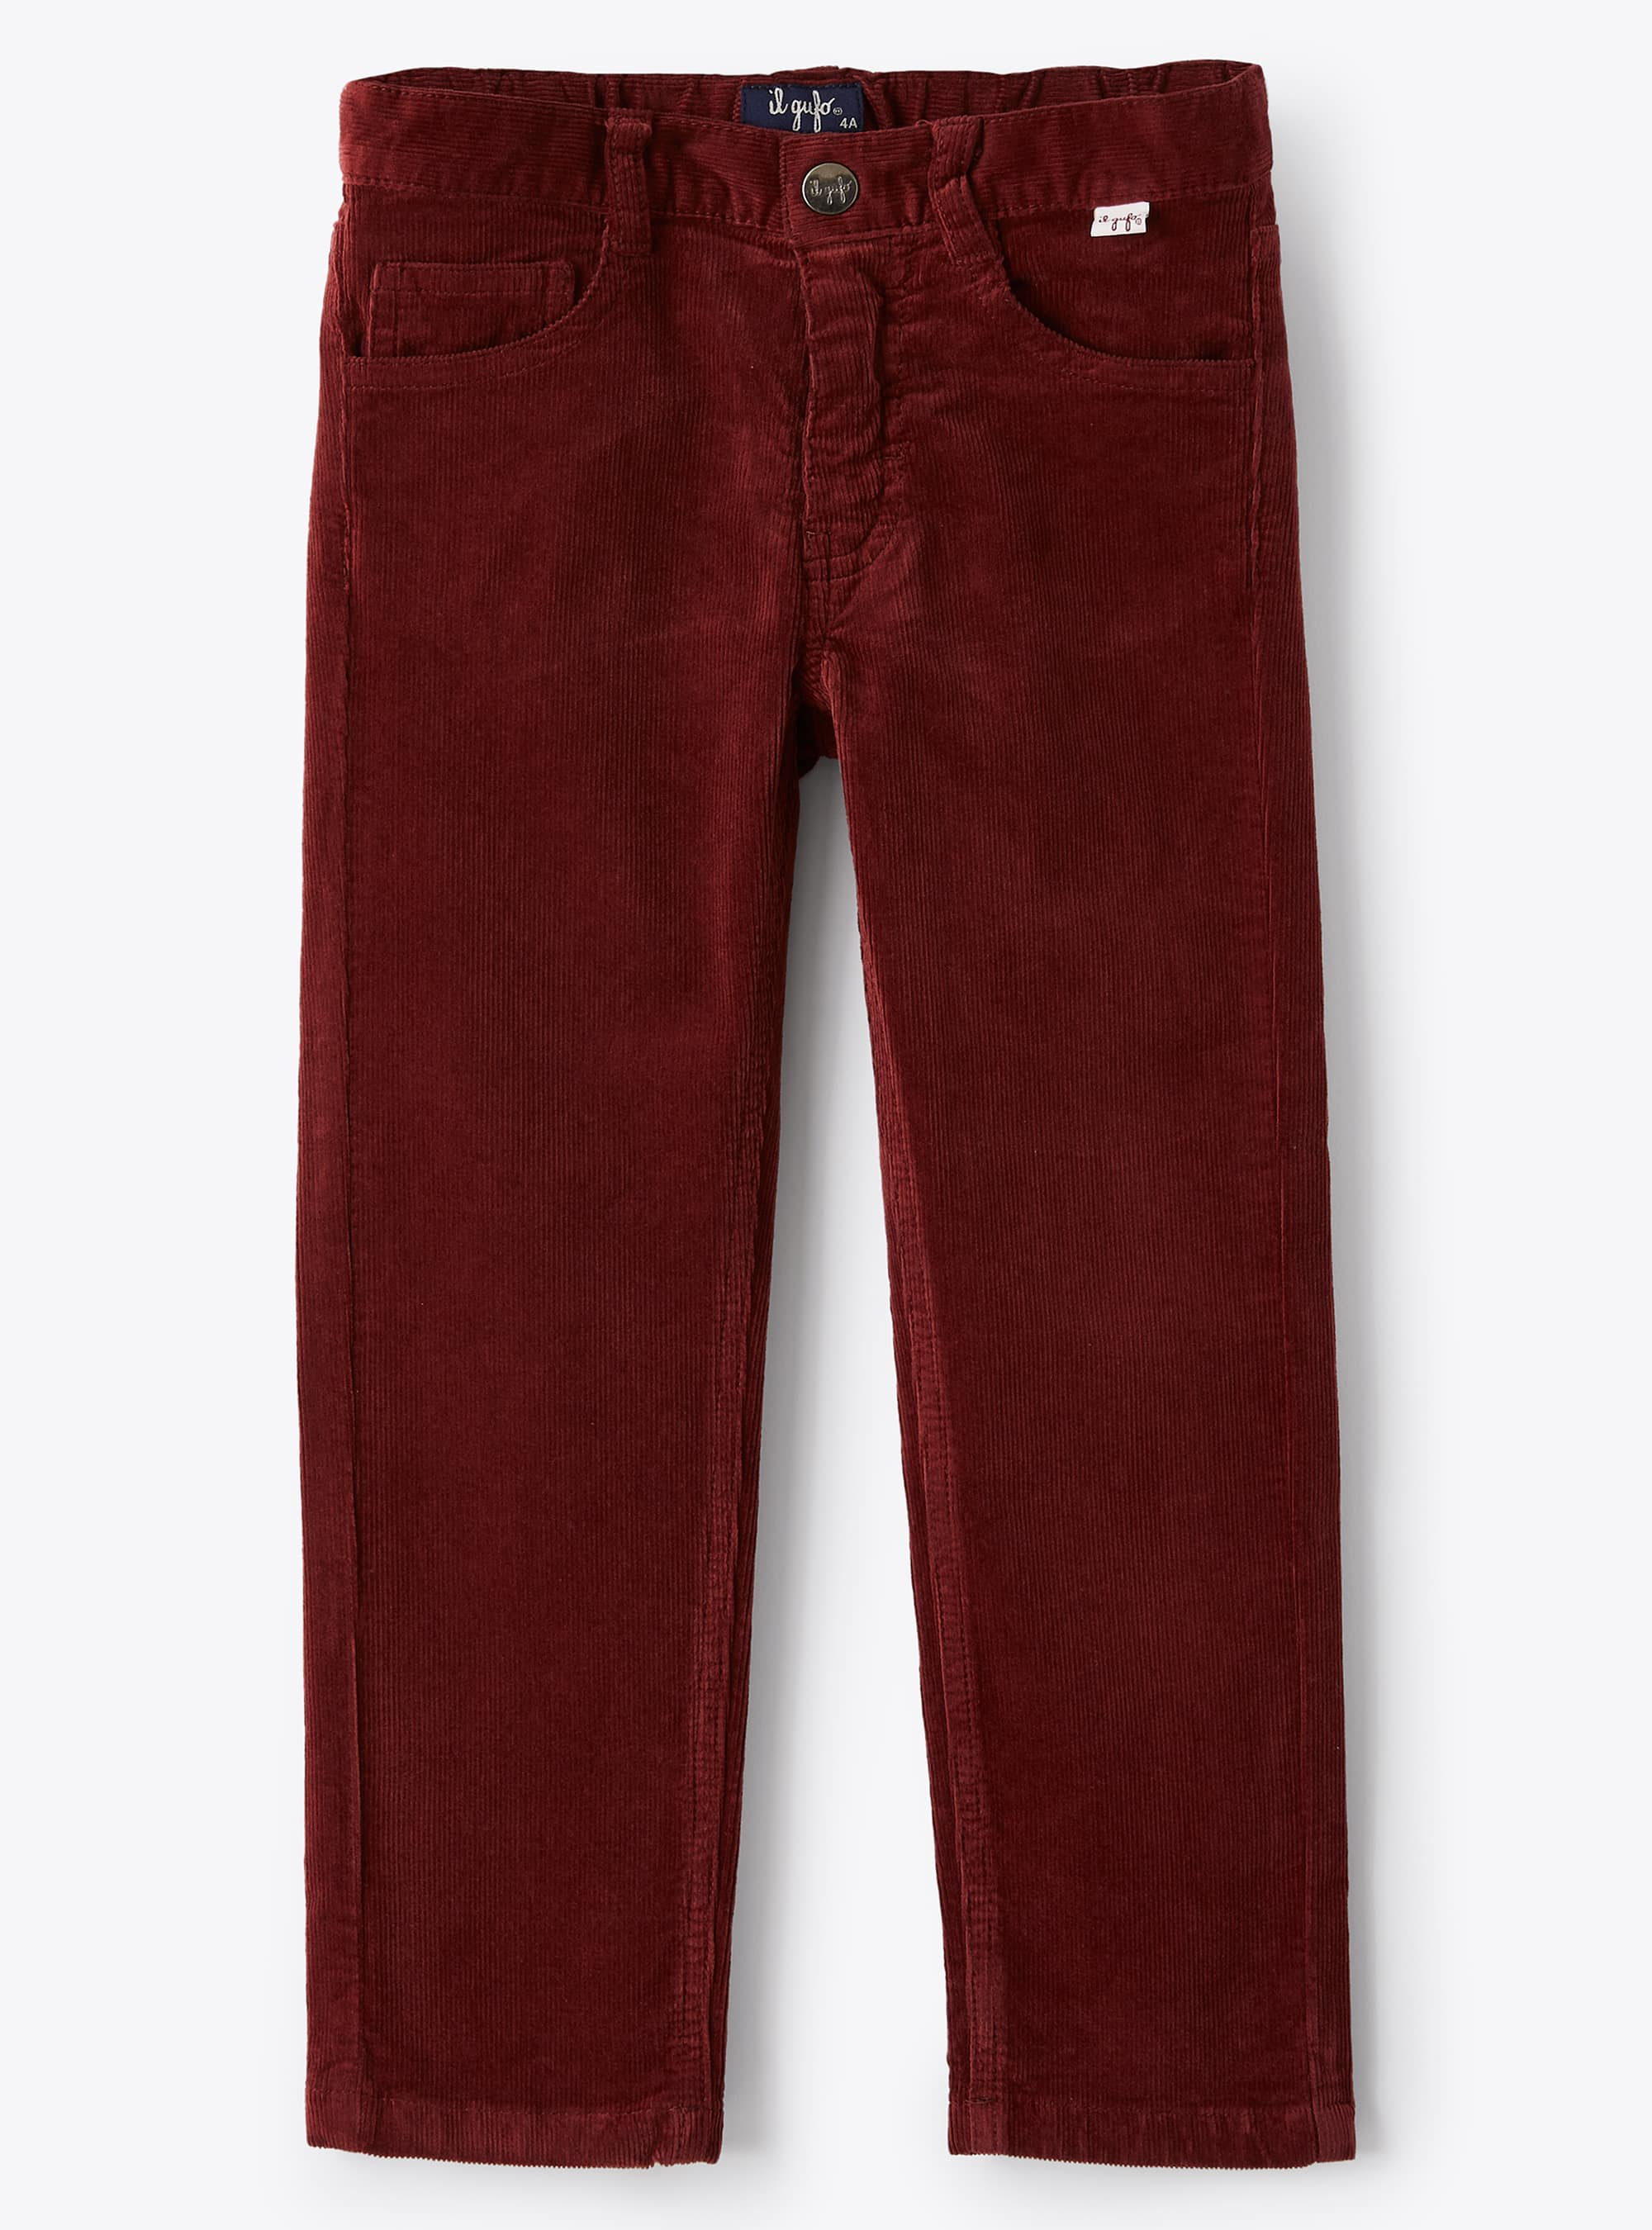 Pantalone regular fit in velluto bordeaux - Pantaloni - Il Gufo